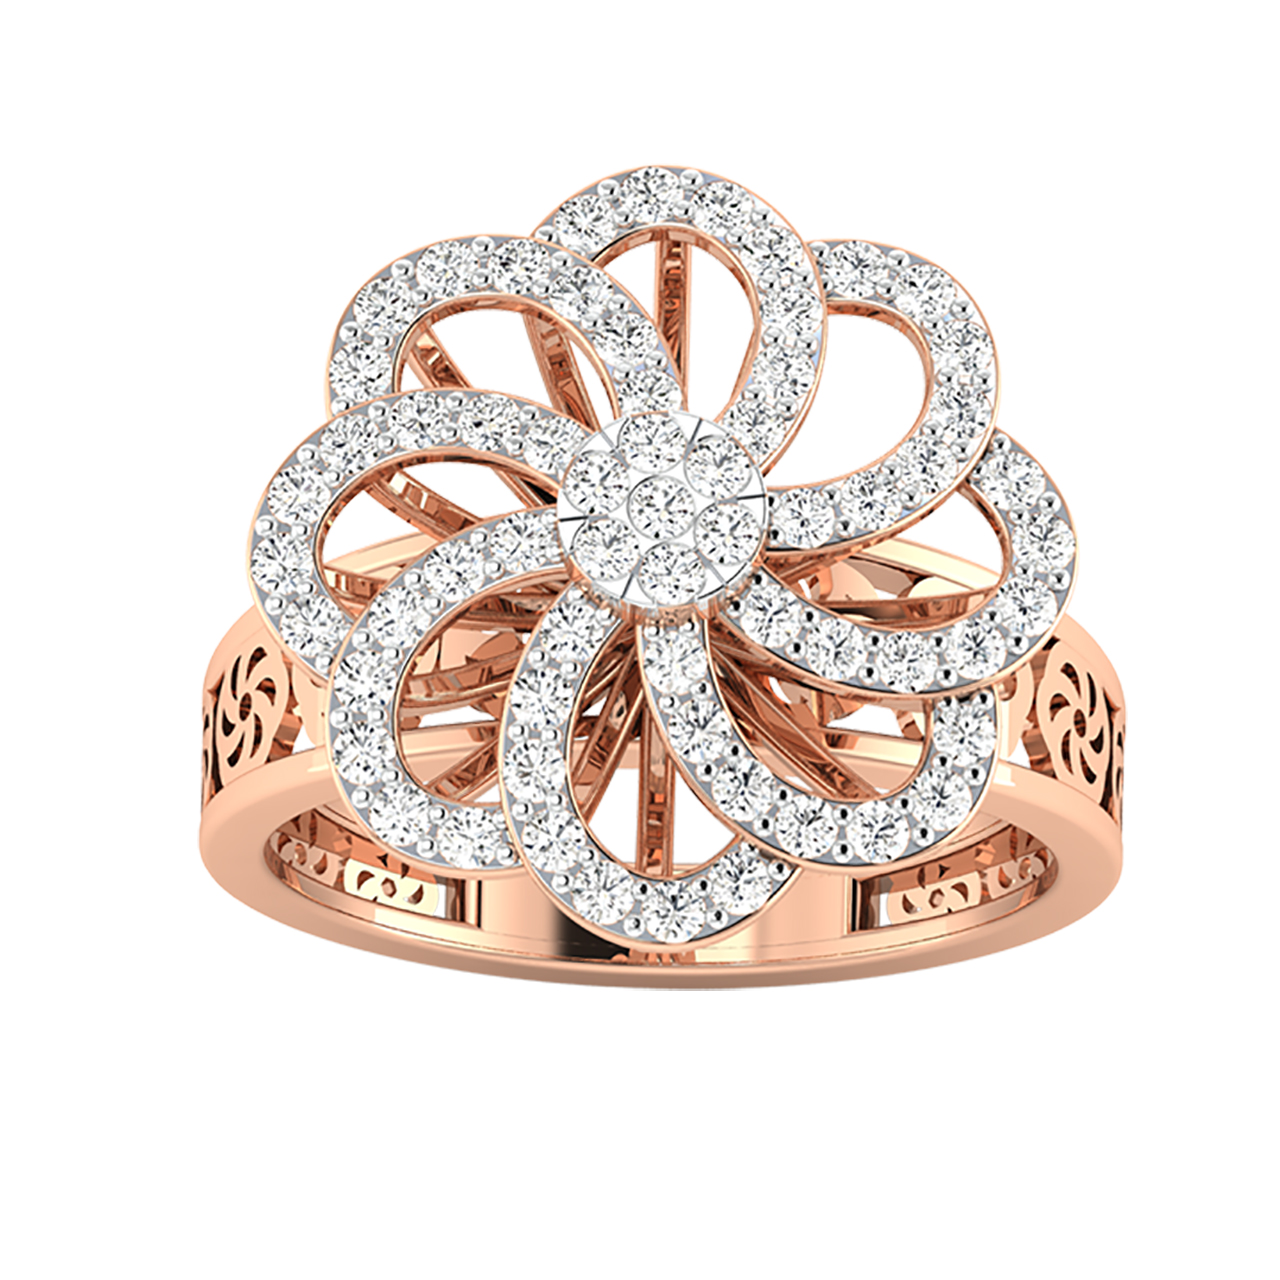 Daisy Round Diamond Engagement Ring